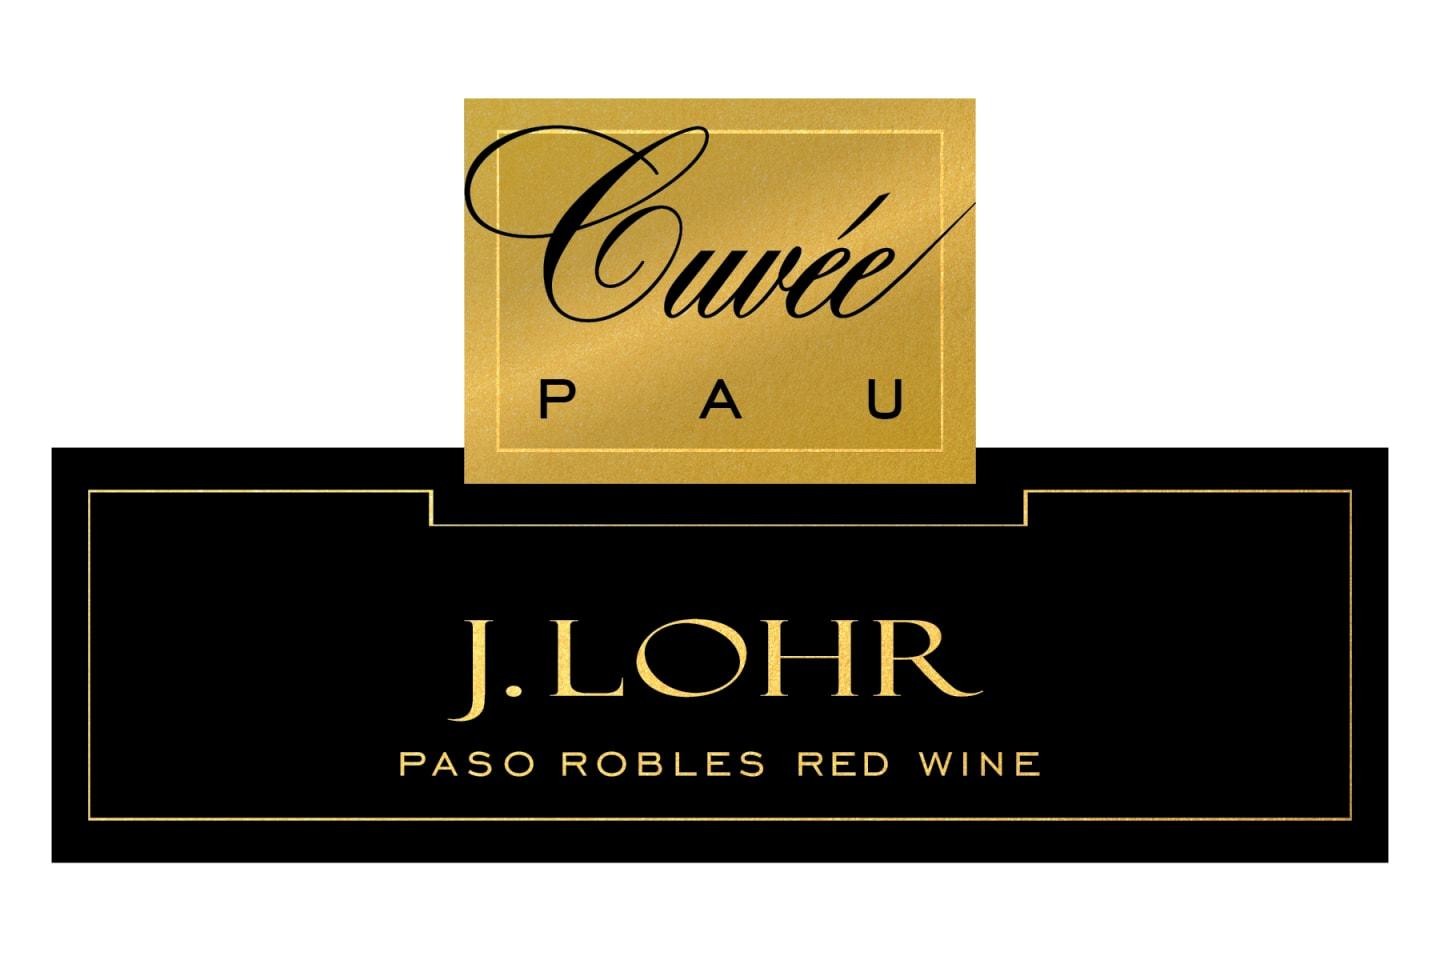 J Lohr Cuvee PAU 2016 - Paso Robles